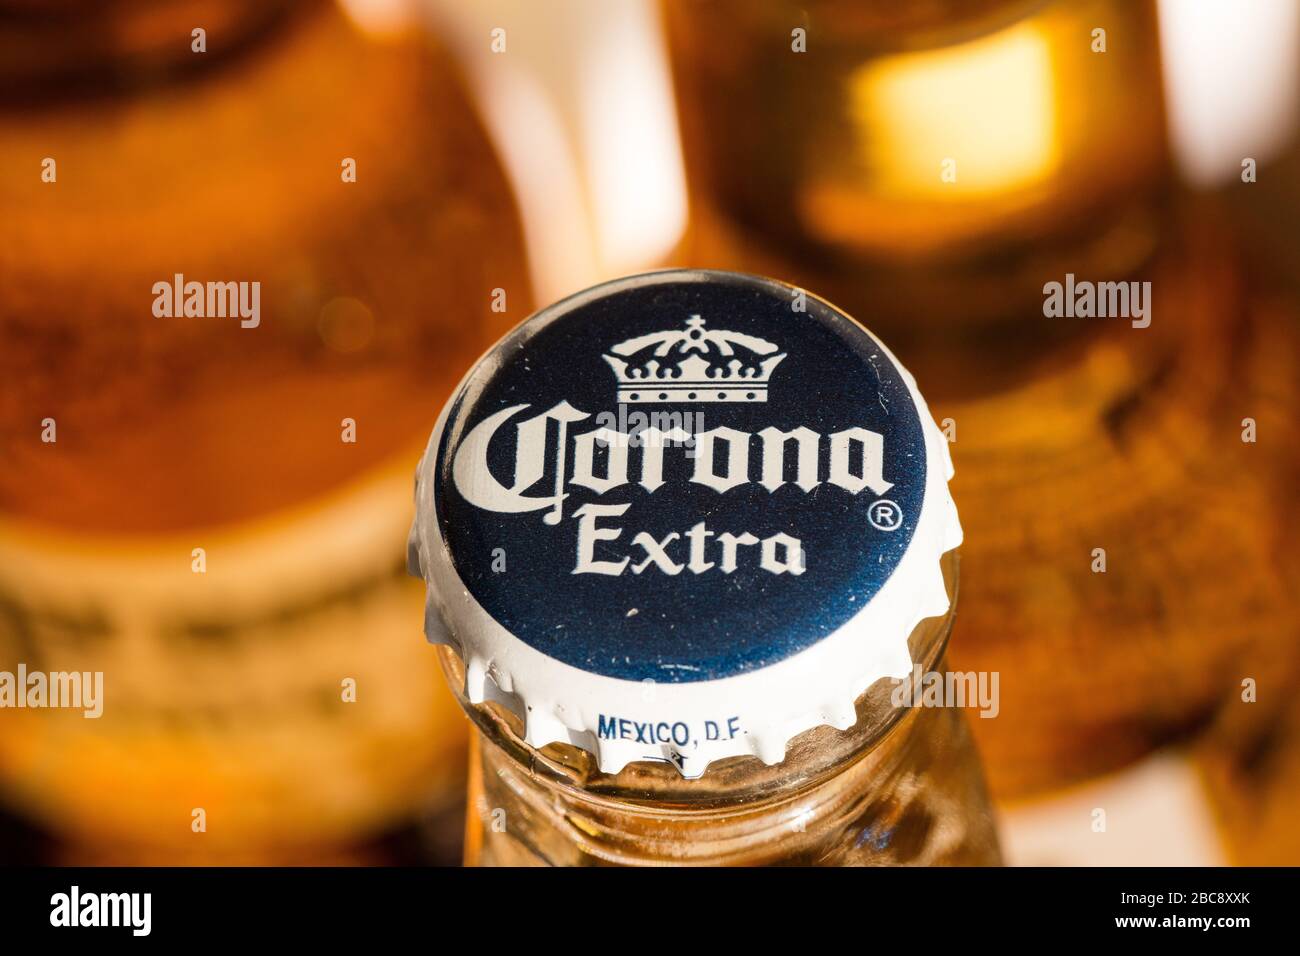 Corona Extra beer bottles. Production has stopped due to the Coronavirus pandemic. Stock Photo